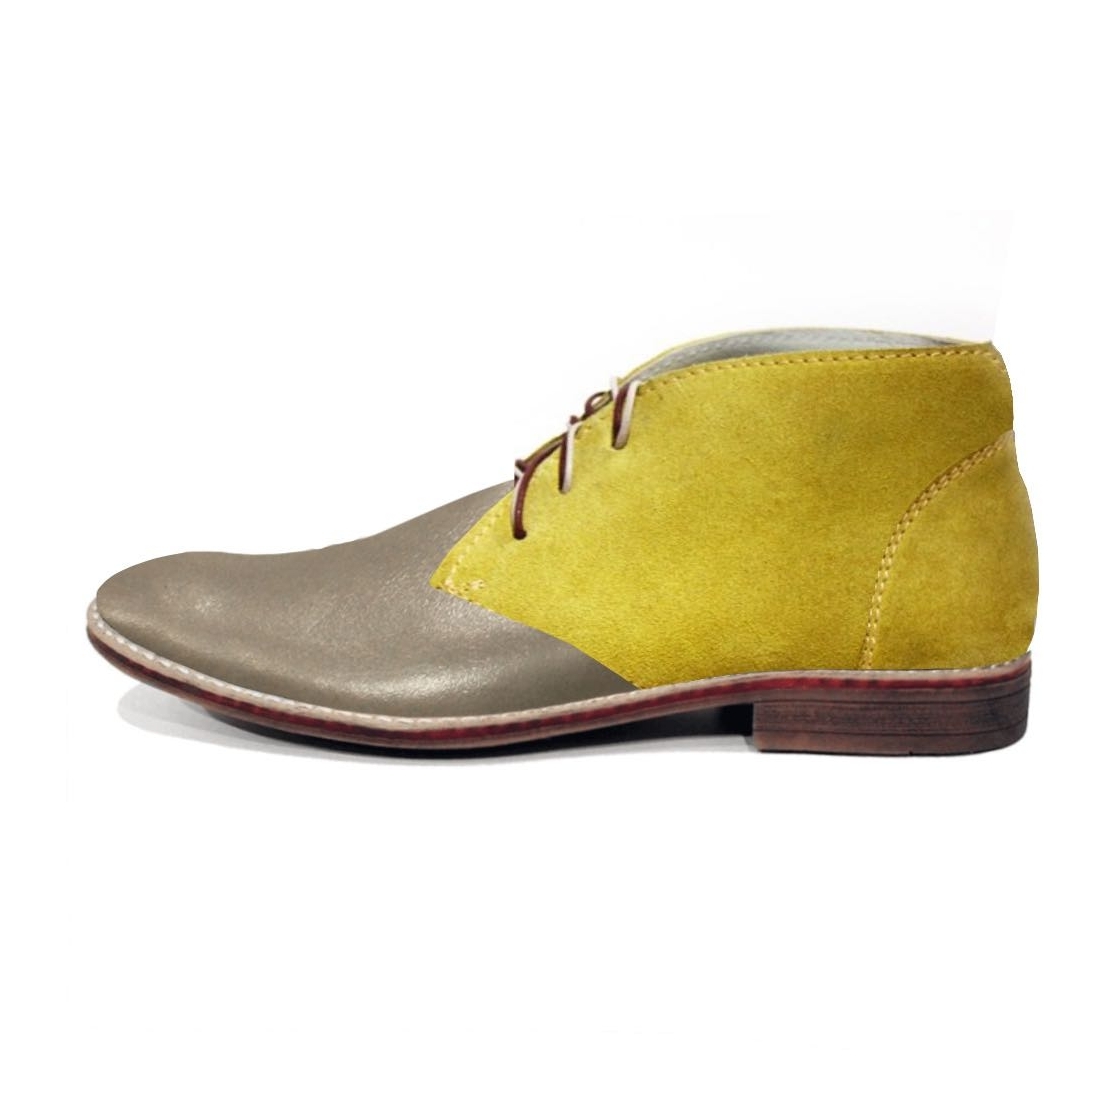 Modello Terrano - Chukka Botas - Handmade Colorful Italian Leather Shoes